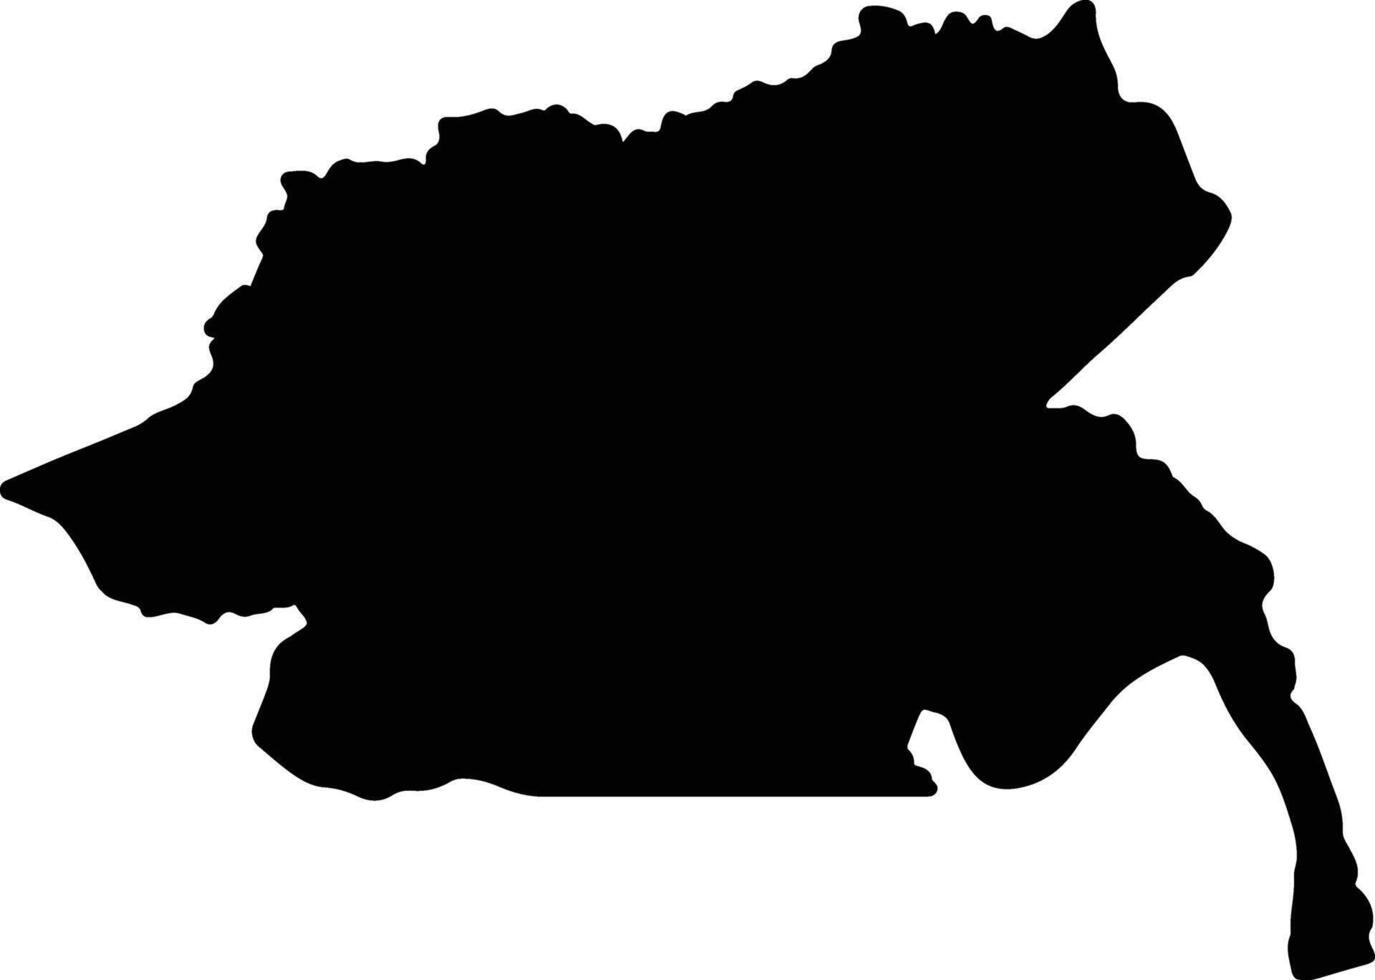 Guainia Colombia silhouette map vector